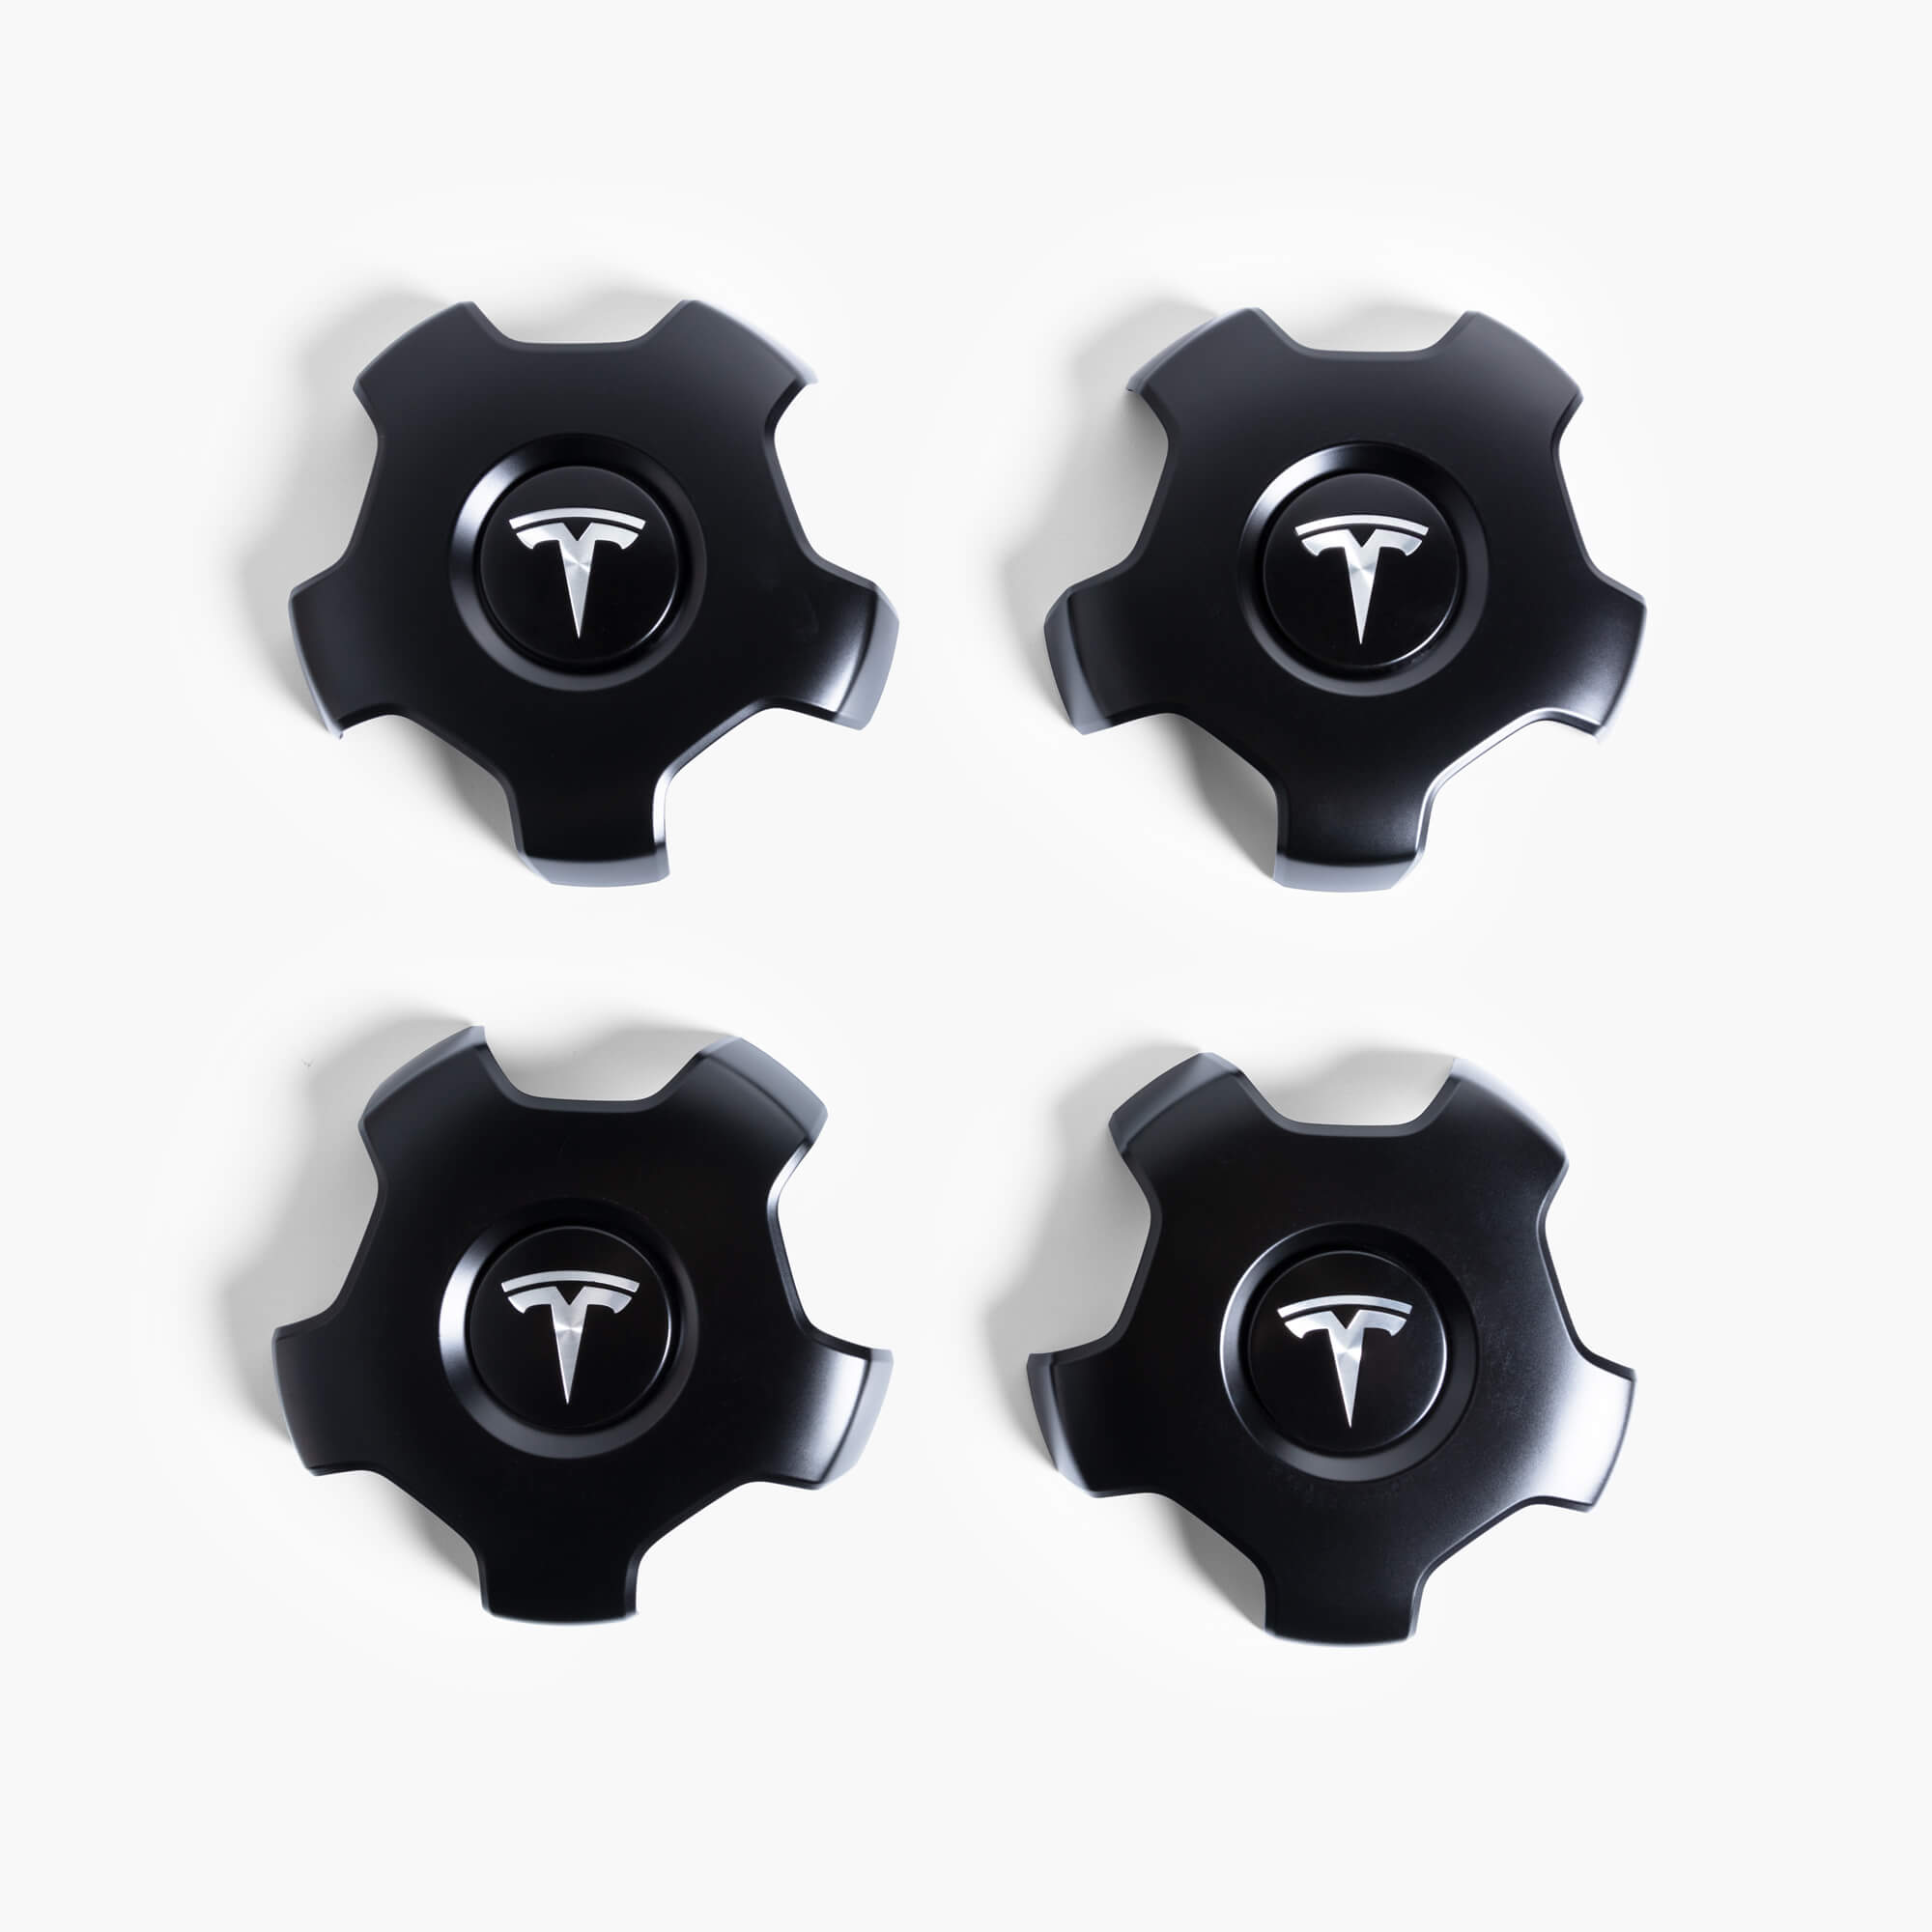 Titanium Black with Silver T Logo Tesla Model 3 Center Caps Hubcaps Cover Aero Wheels Cap Kits for Original Standard Rims